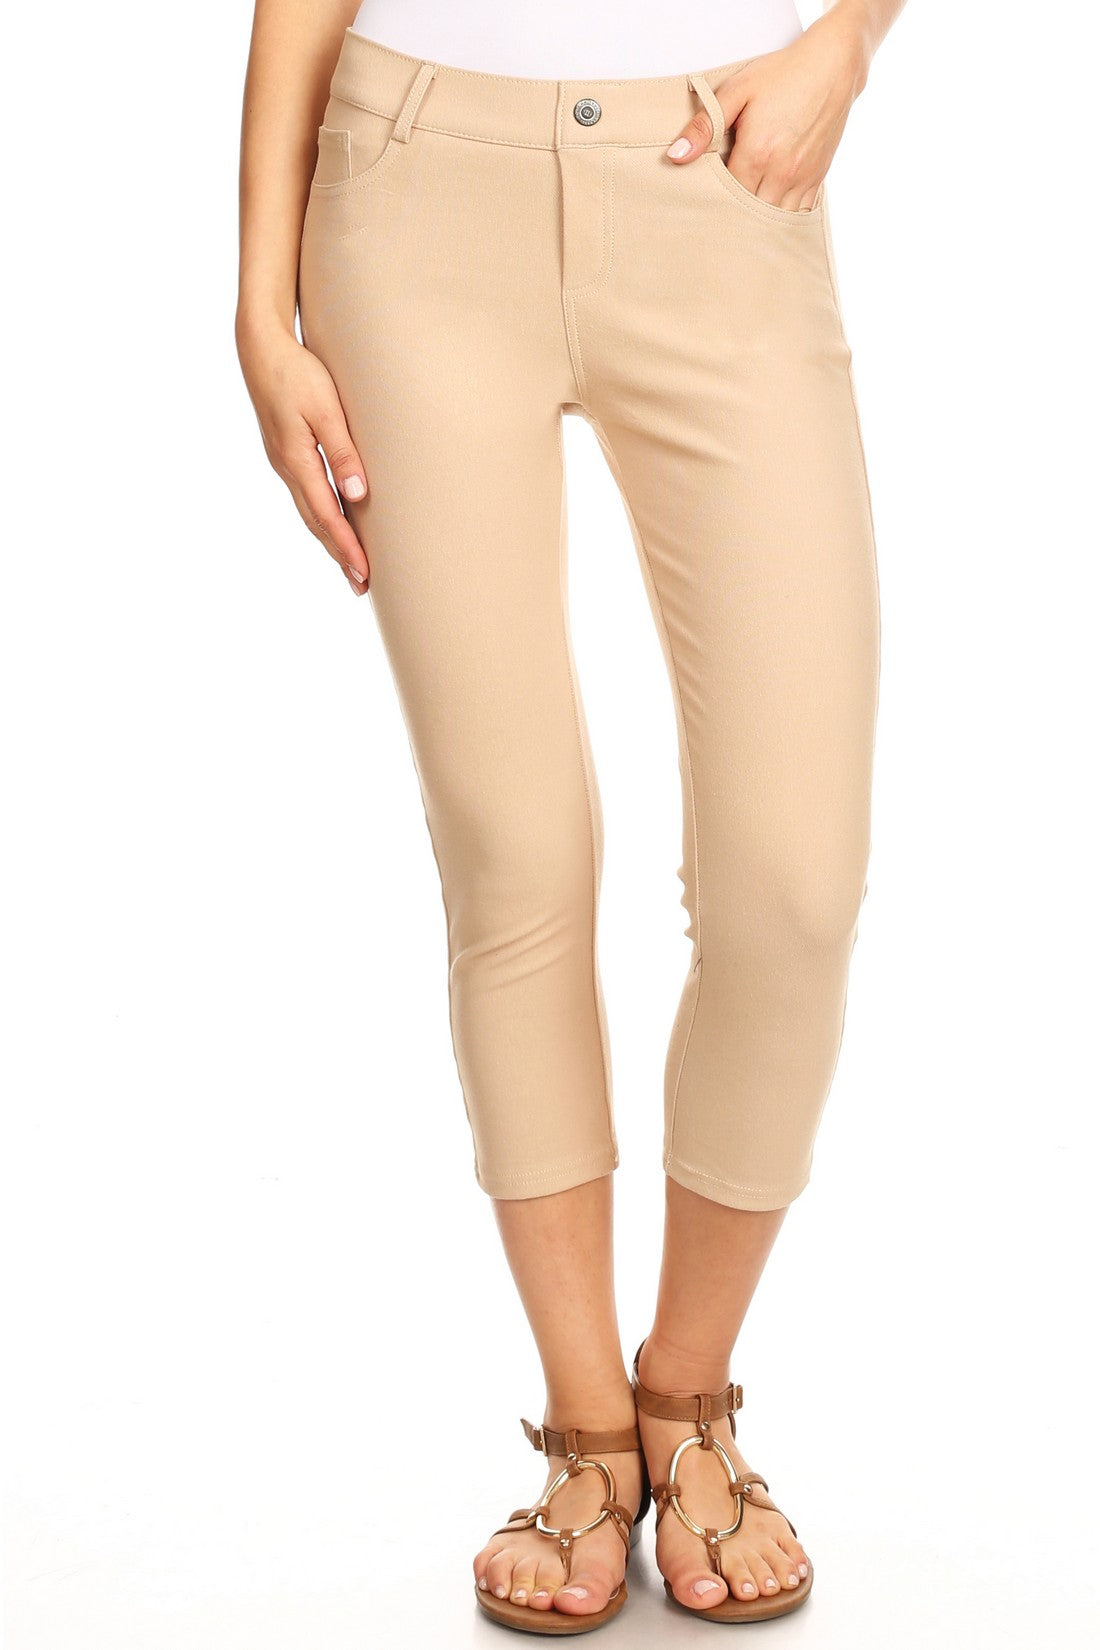 Camel color Plus size Jean Capris Jeggings - 5 Pockets Tan – Berry Blossom  Fashion